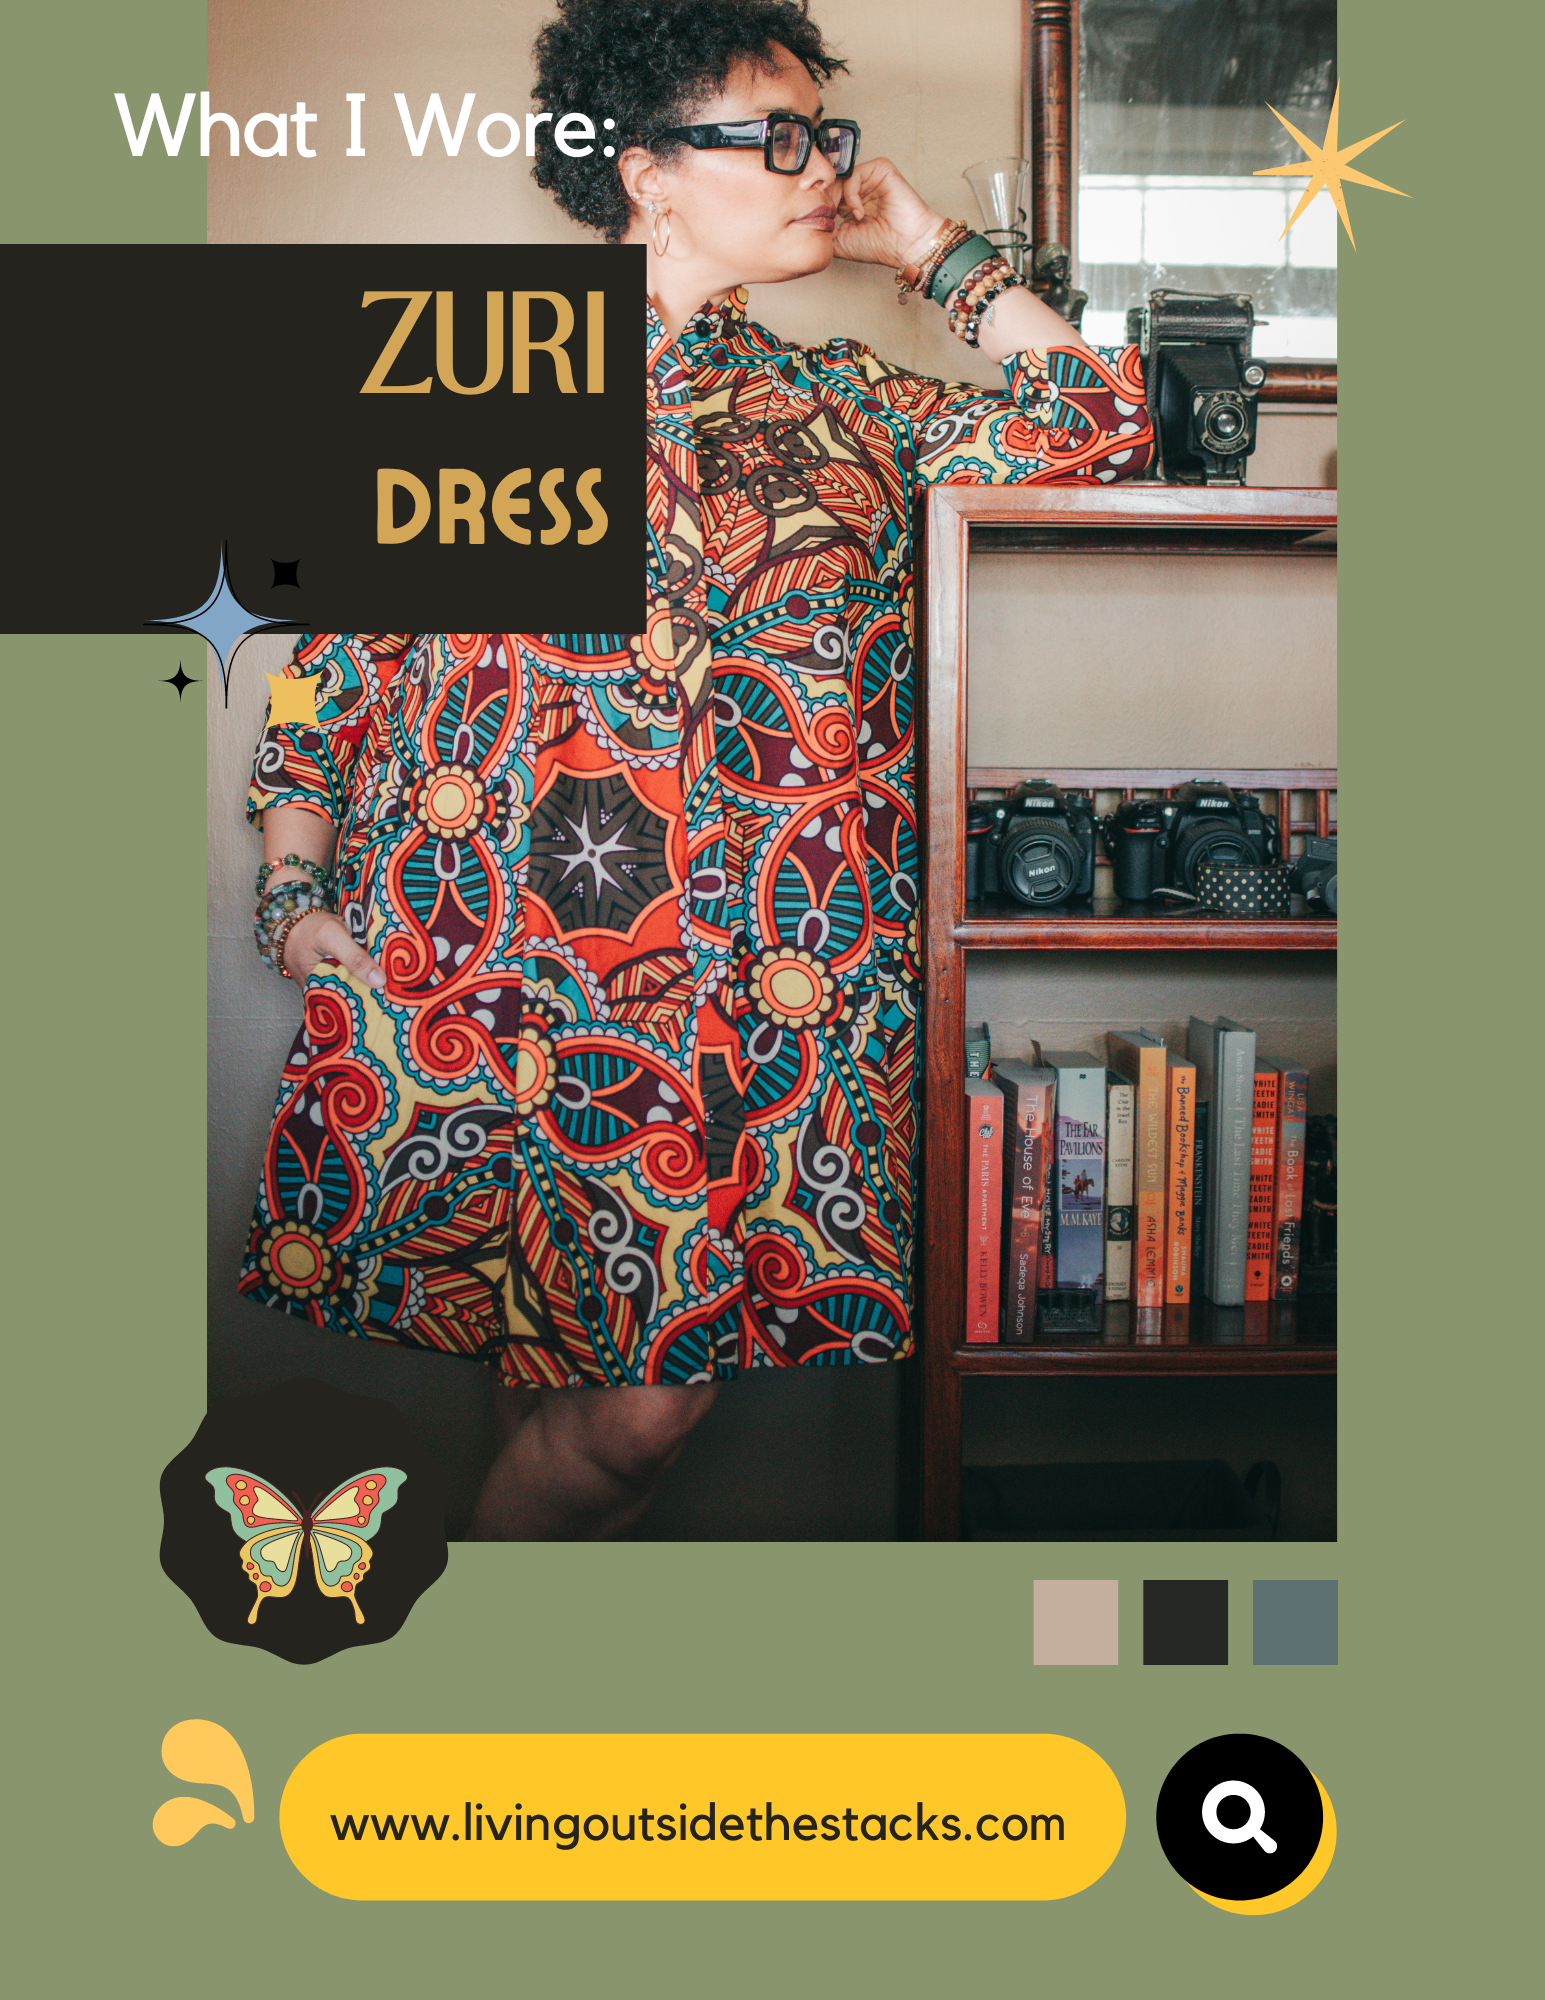 What I Wore Zuri Dress Pinterest {living outside the stacks} Follow @DaenelT on Instagram #ZuriDress #HeyZuri #OverFiftyStyle #BohoStyle #LibrarianStyle #Librarianotographer #50AndFabulous #SustainableStyle